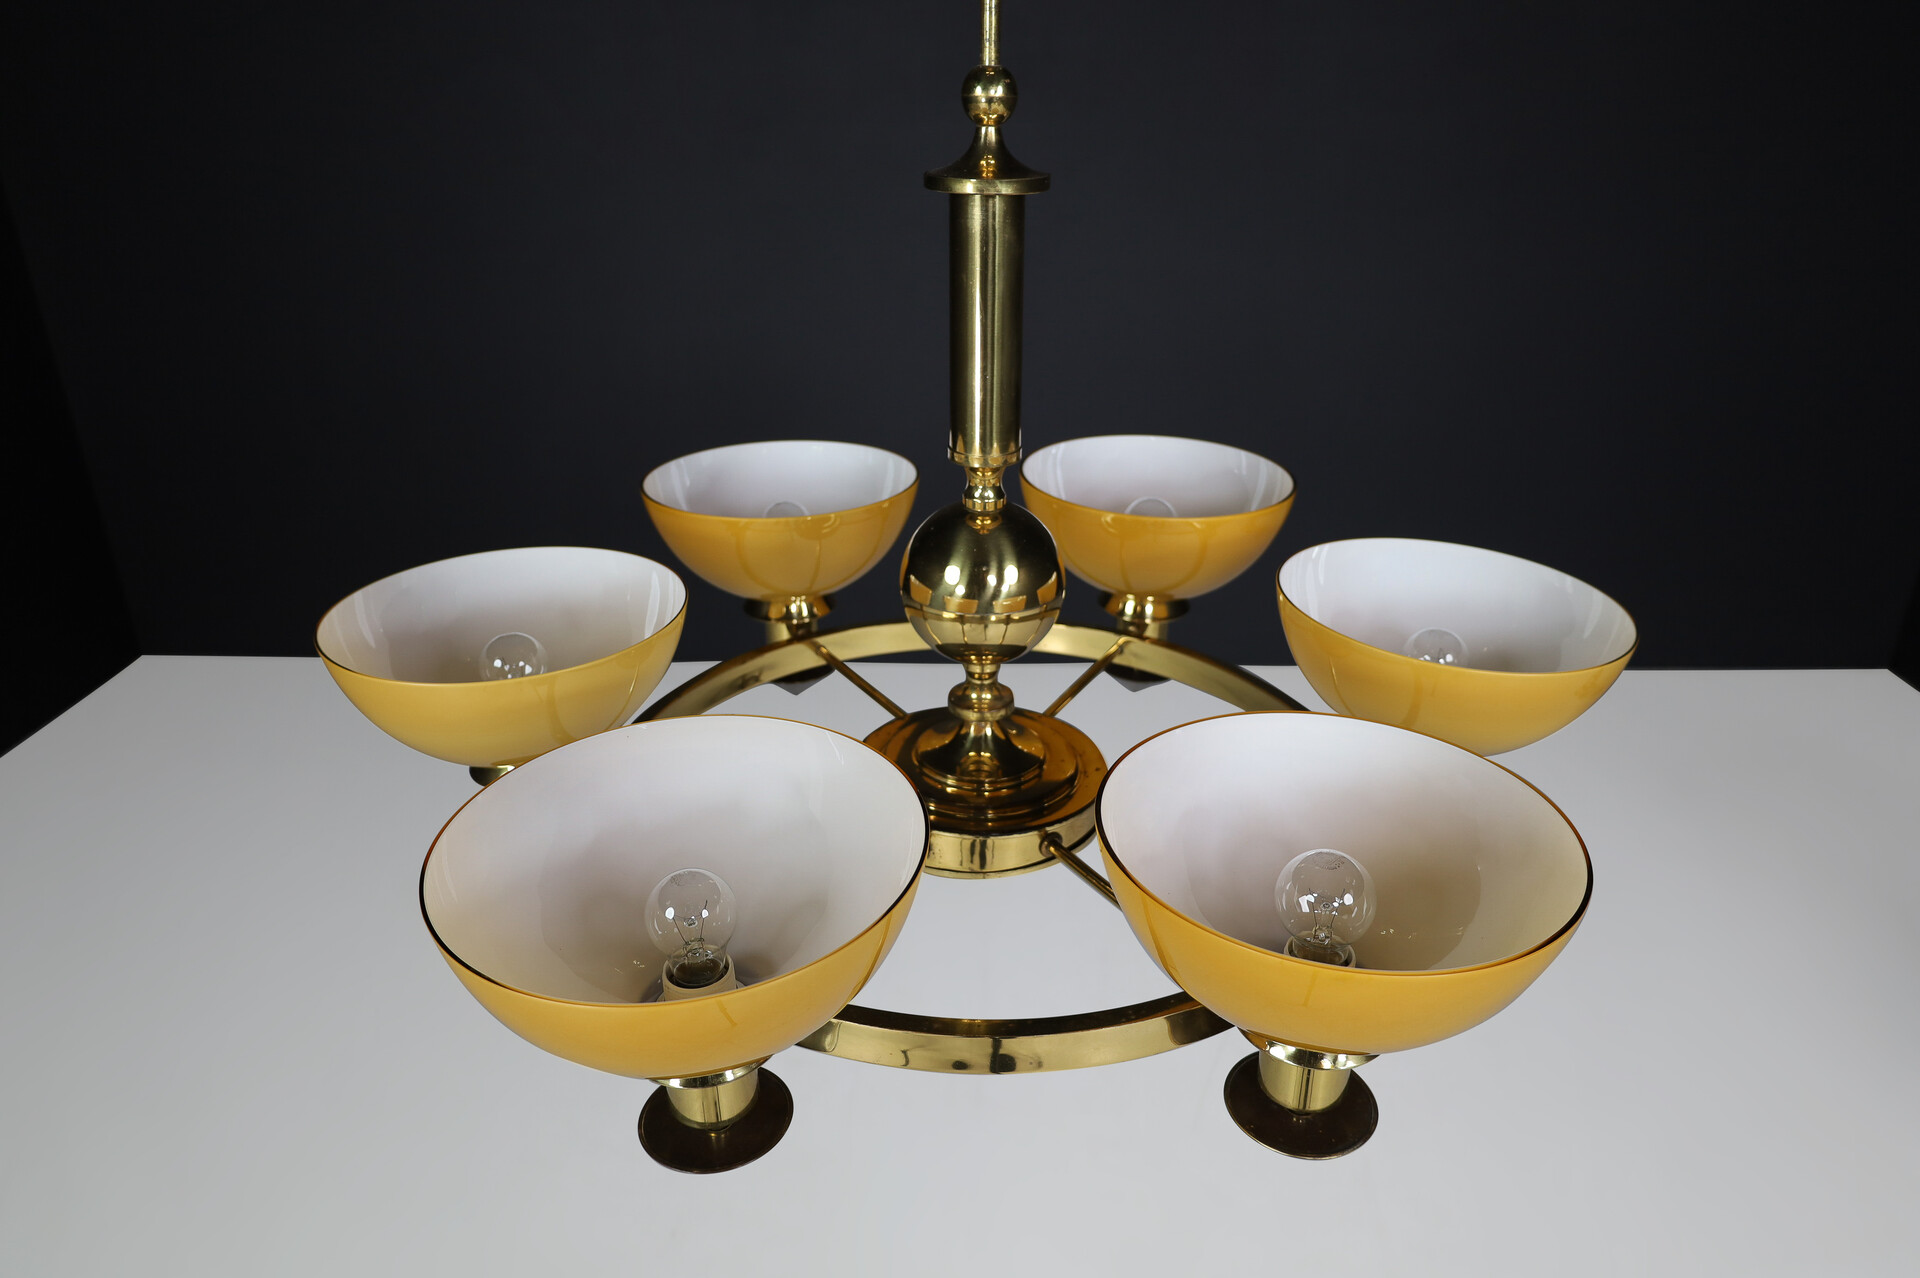 Modern XL Bras and Amber/ Gold opaline glass Chandeliers, Italy 1970s  Late-20th century - Chandeliers - Lighting - Davidowski